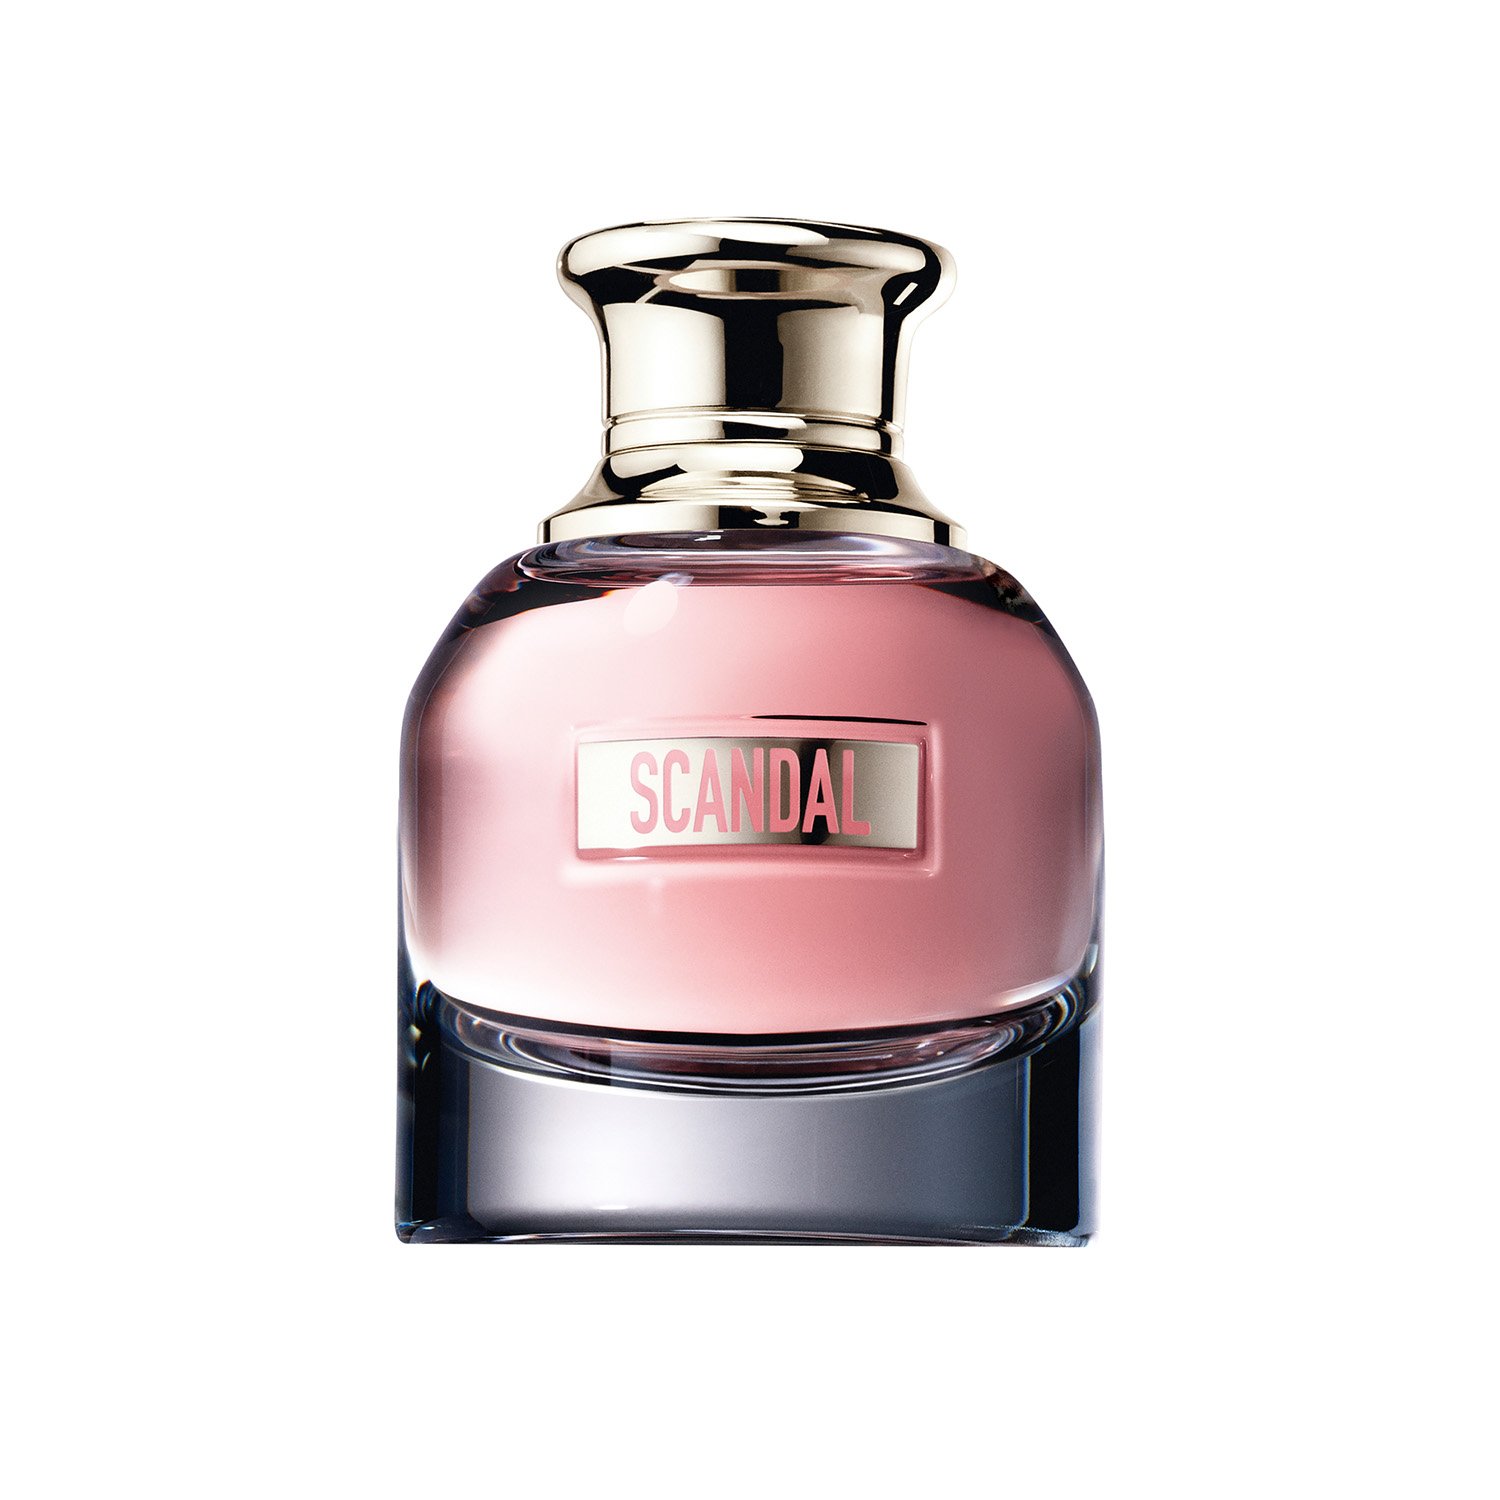 Scandal parfum vrouwen - BEAUTY